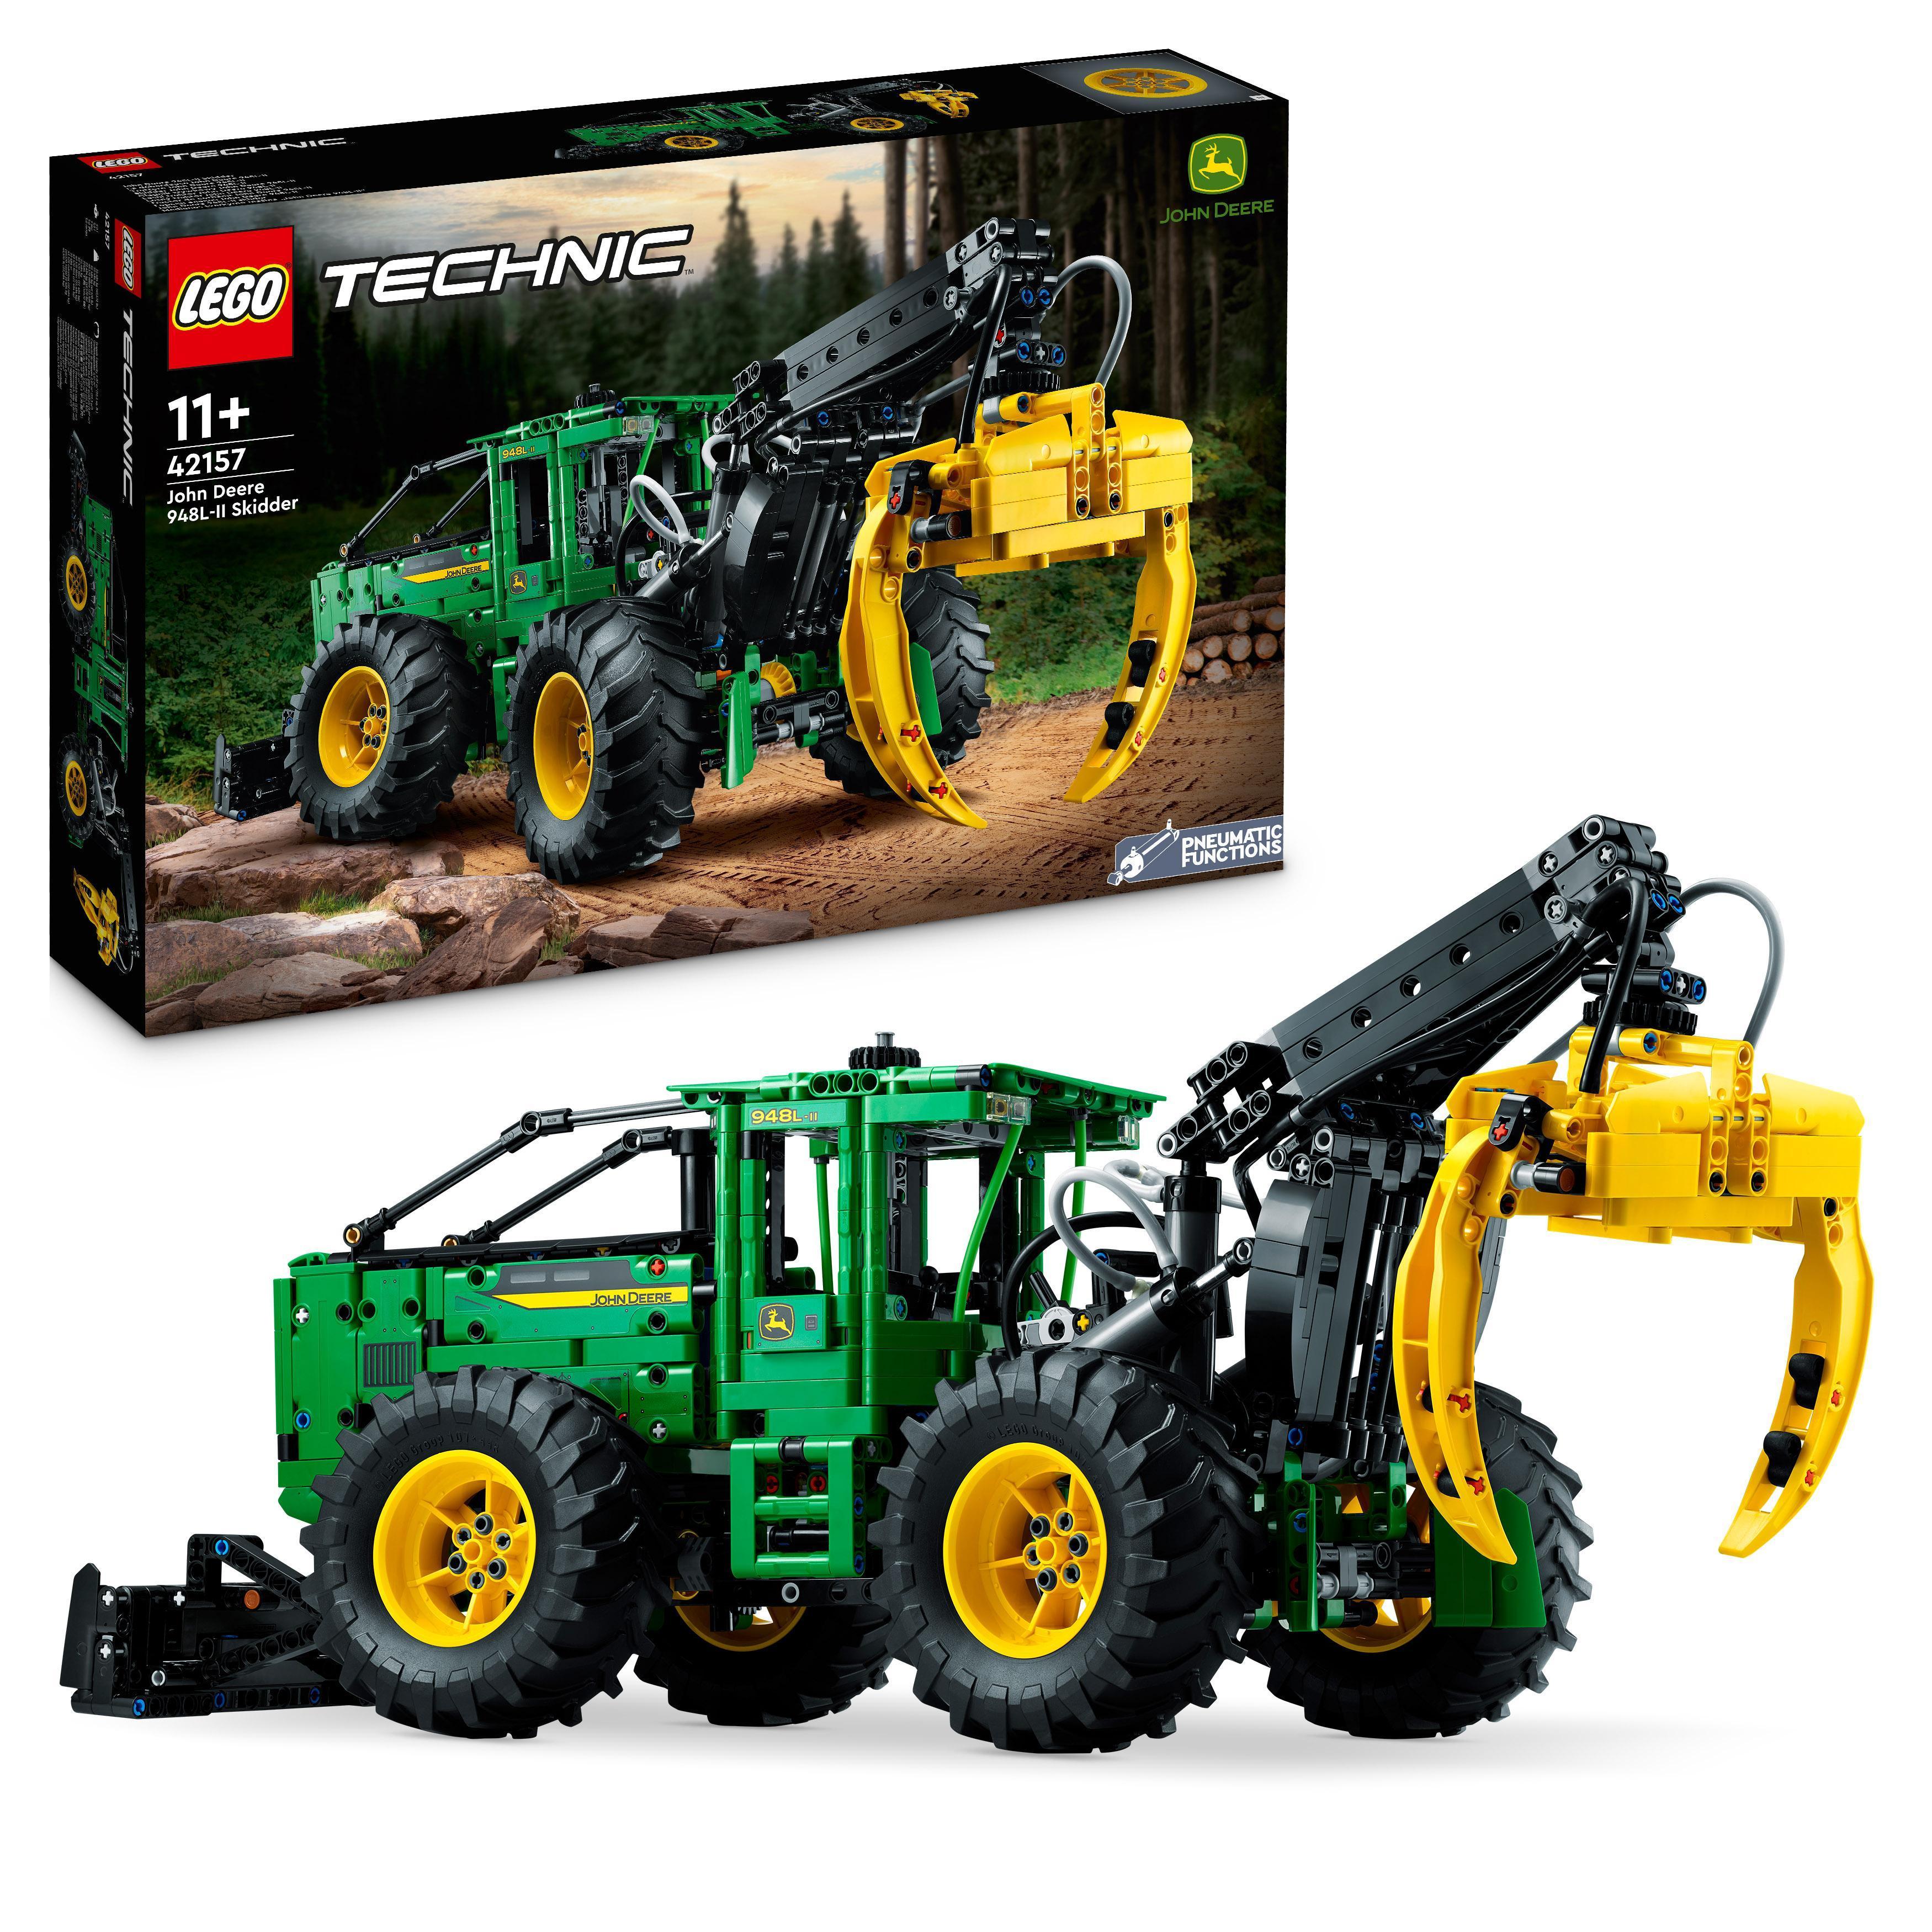 Kaufe LEGO Technic - John Deere 948L-II Skidder (42157